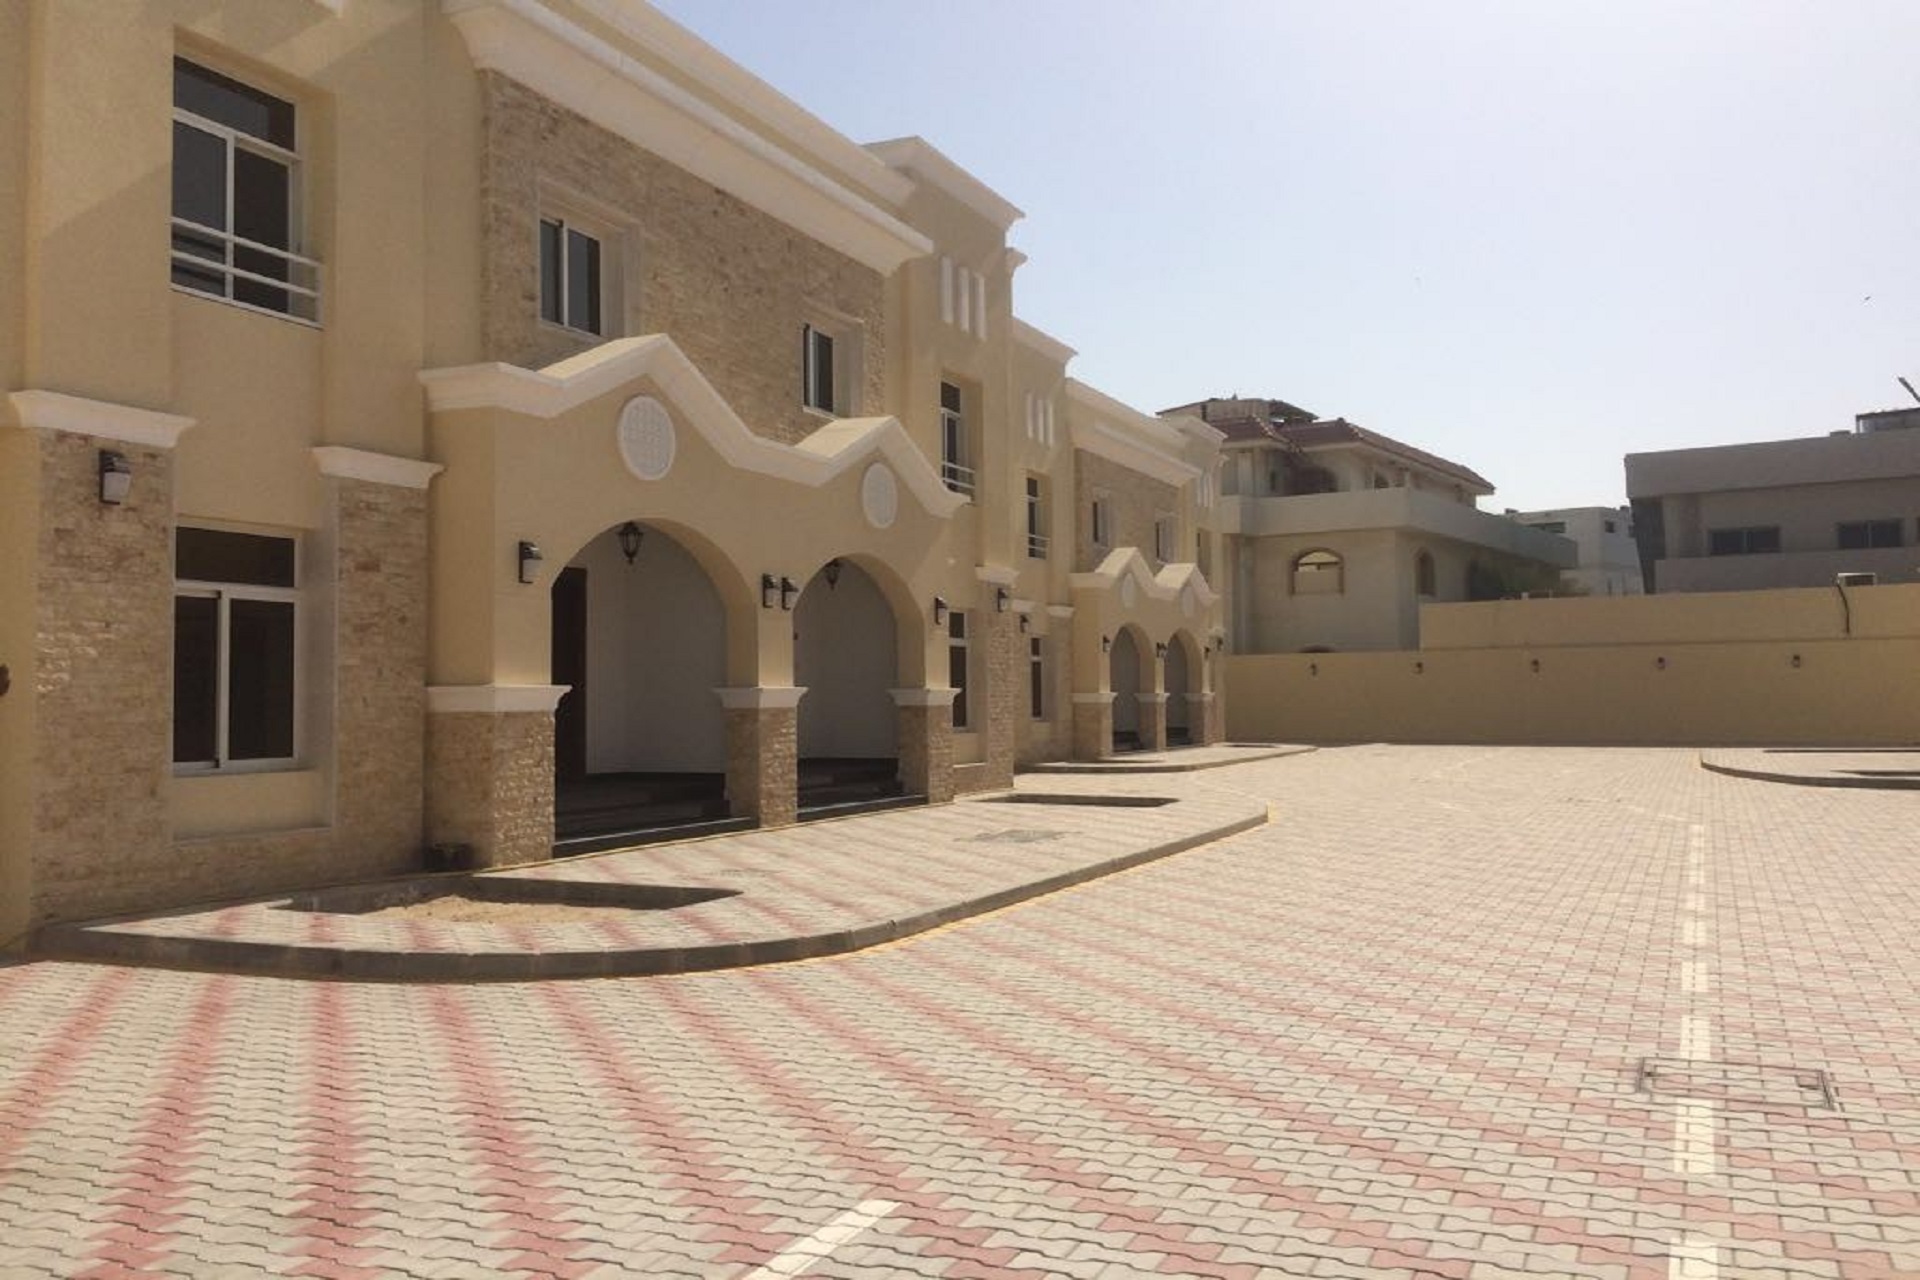 6 bedrooms compound villas in Hilal KVC